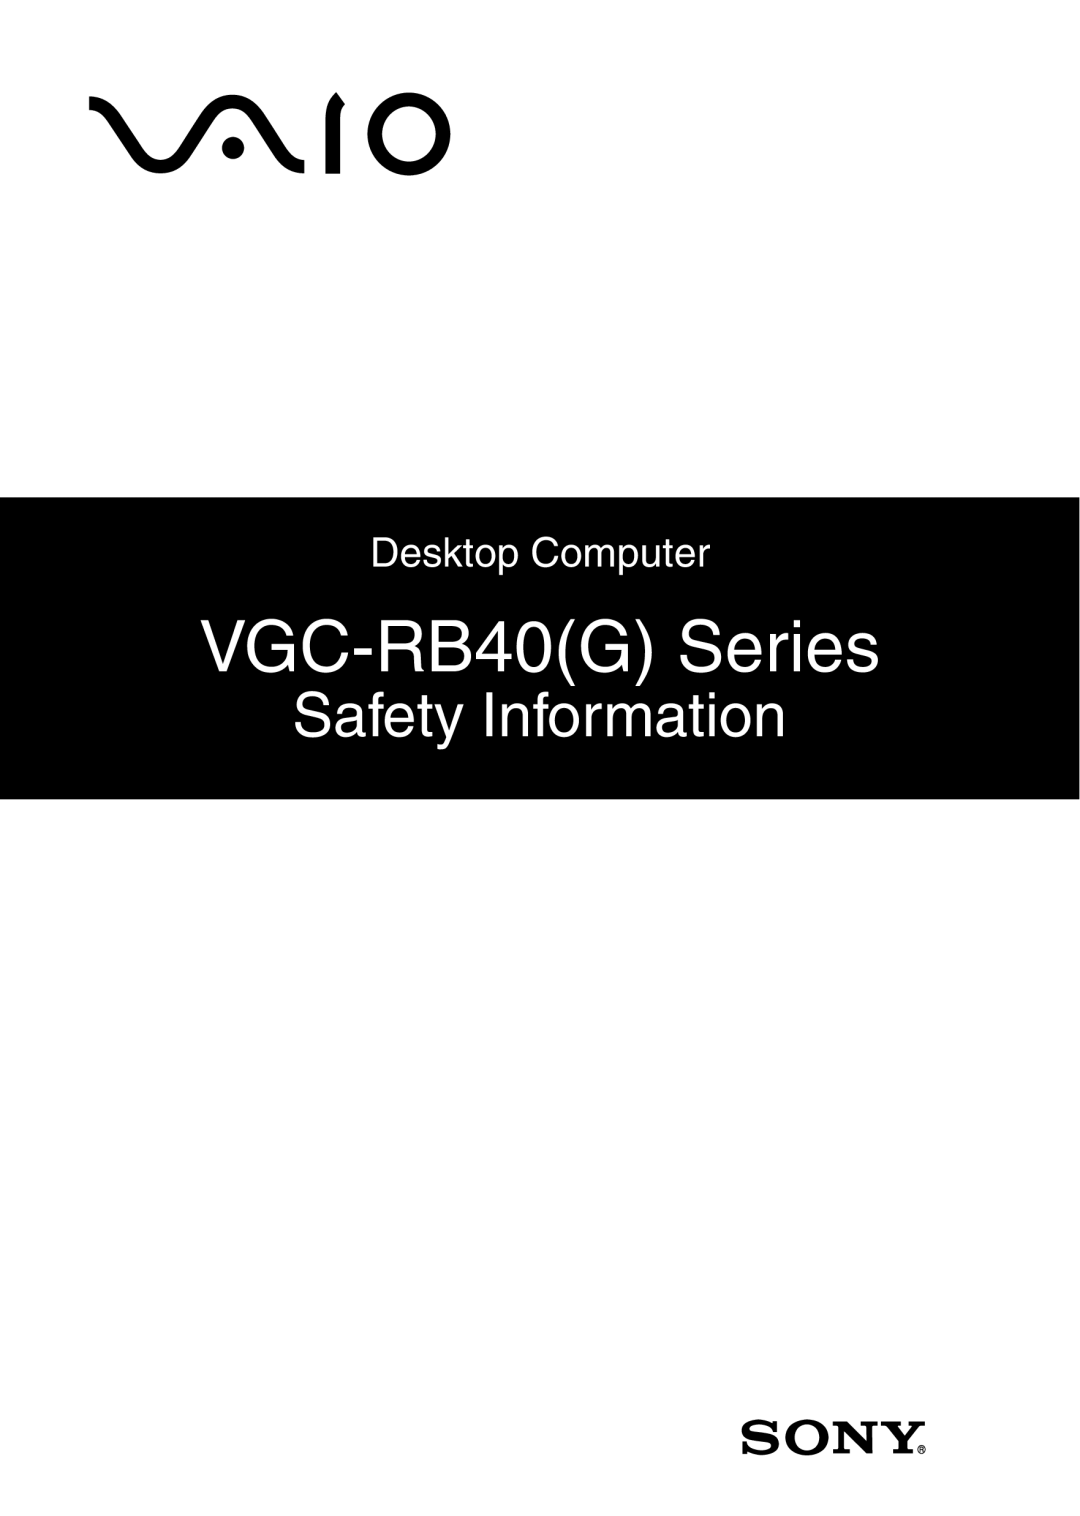 Sony VGC-RB40(G) manual VGC-RB40G Series, Safety Information, Desktop Computer 